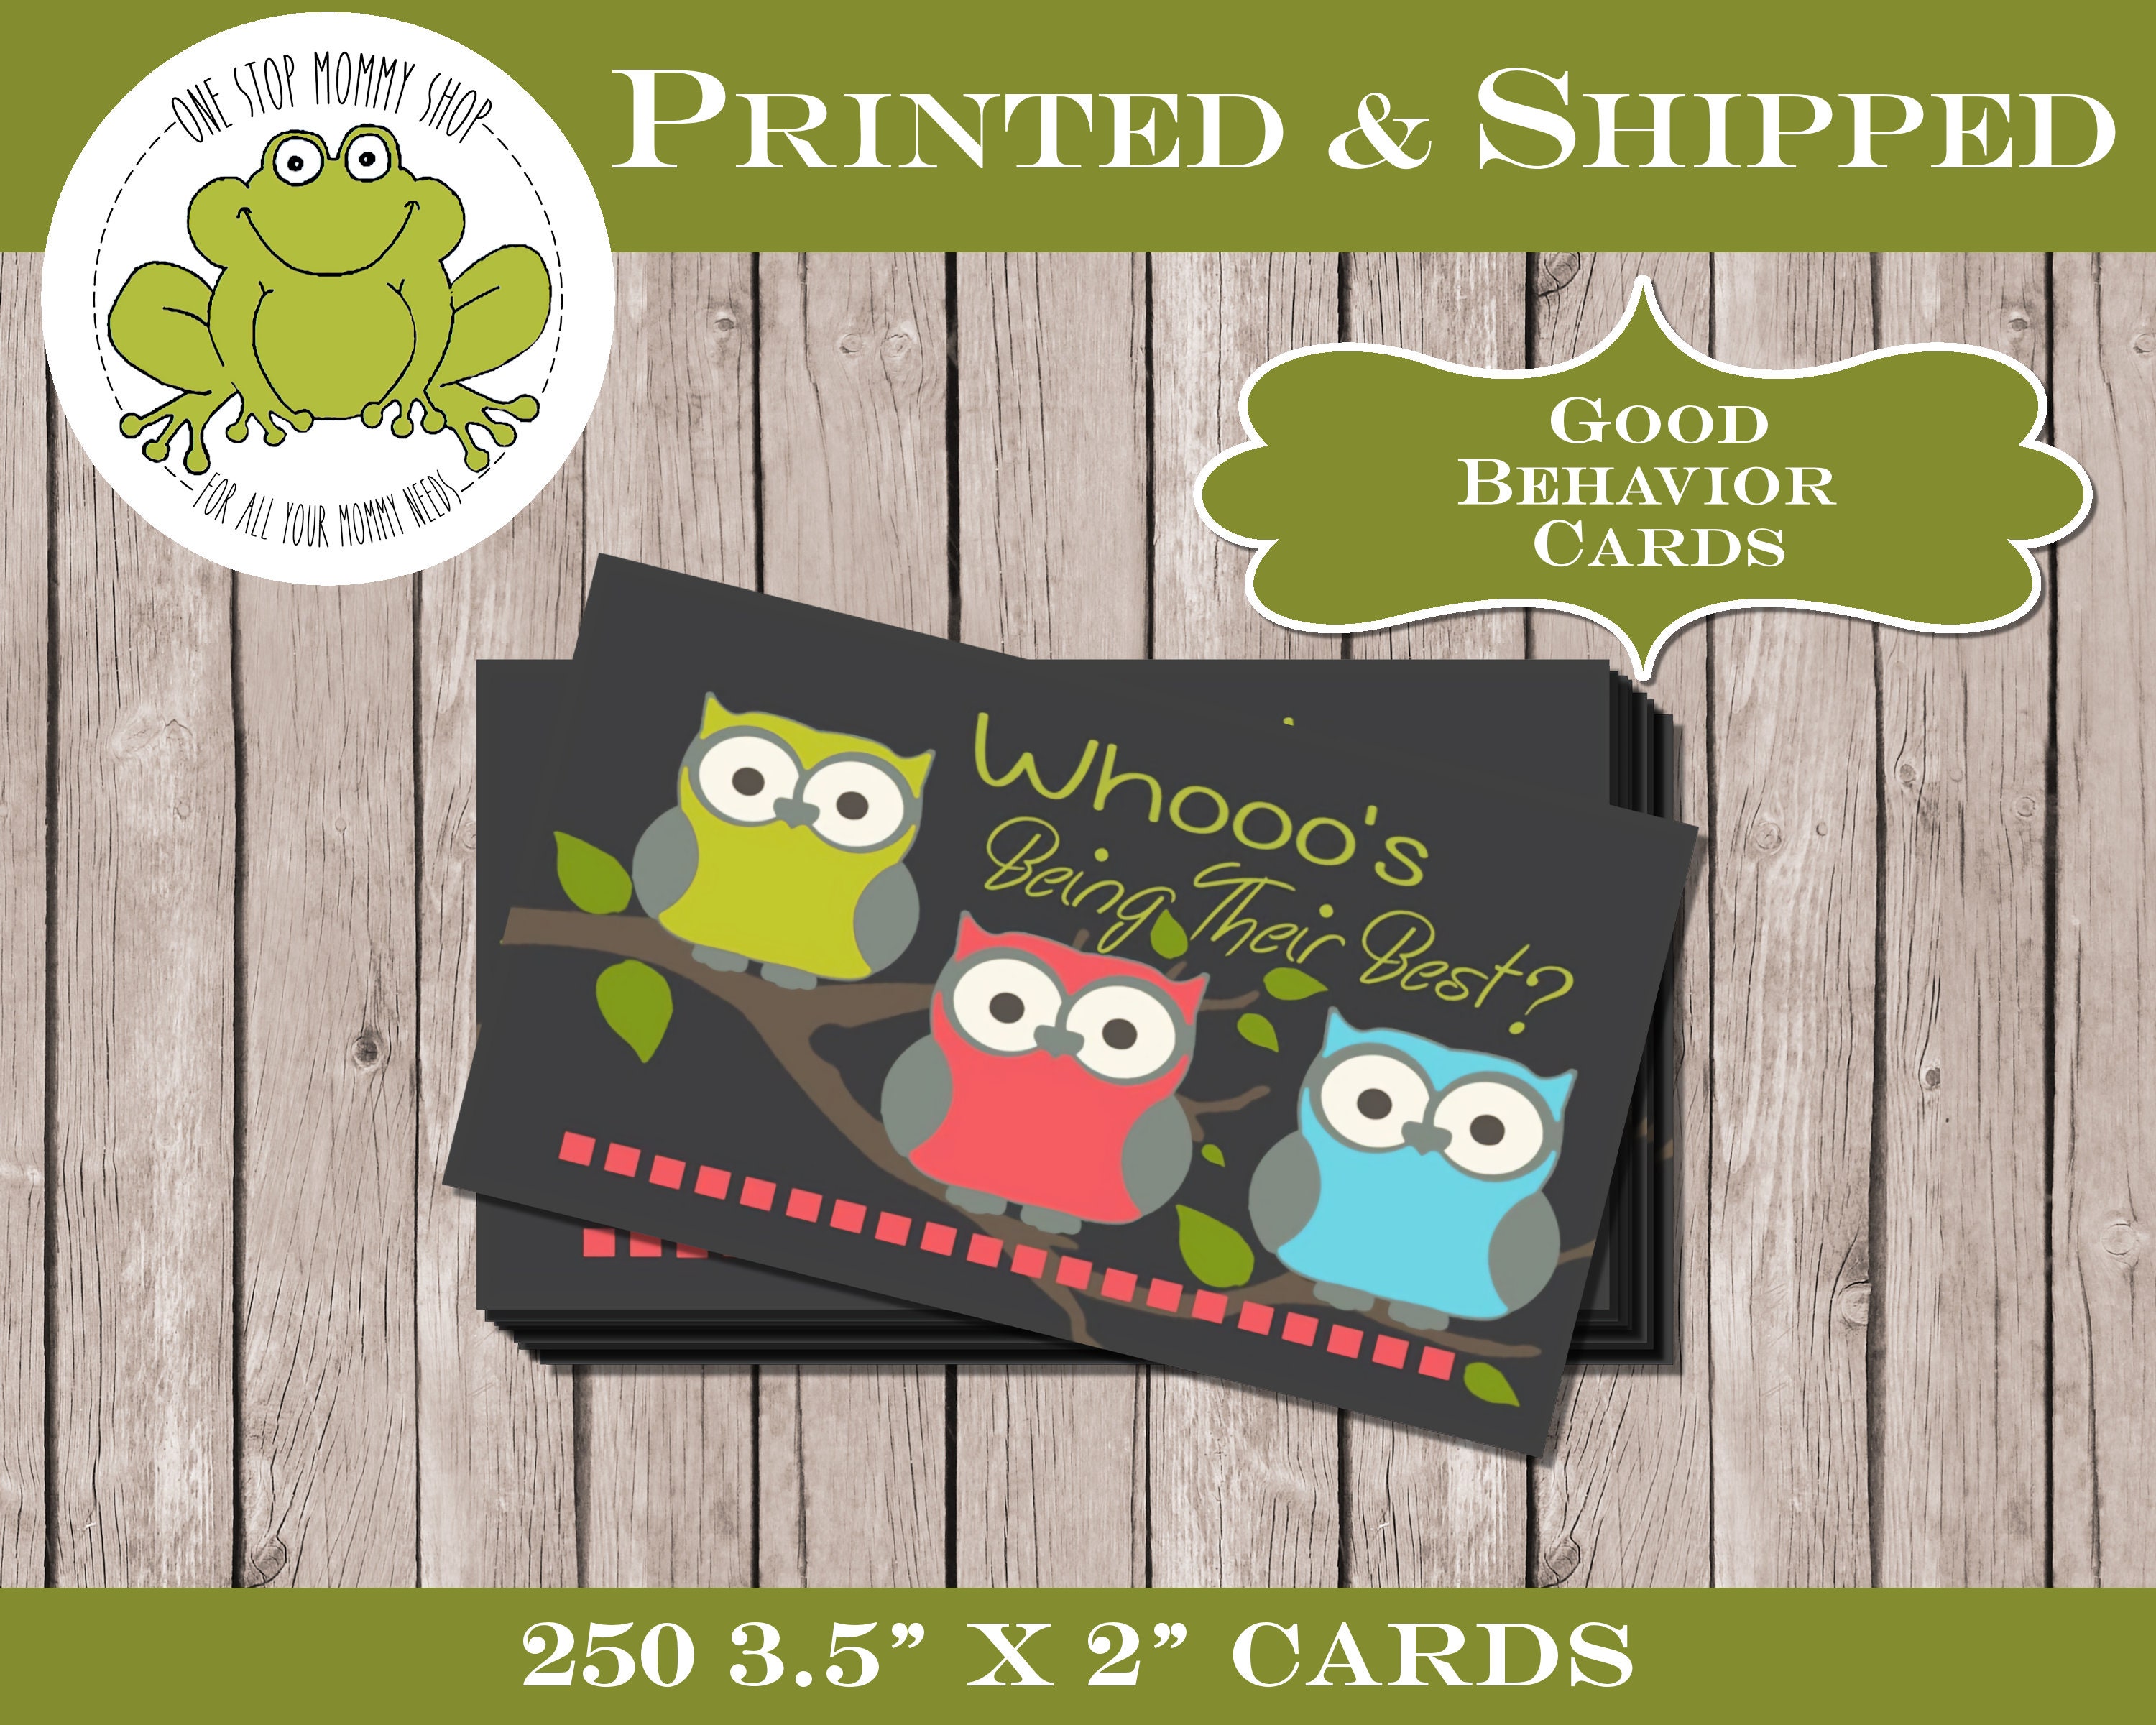 50Pcs/Set Kids Reward Cards Cartoon Animals Punch Cards for